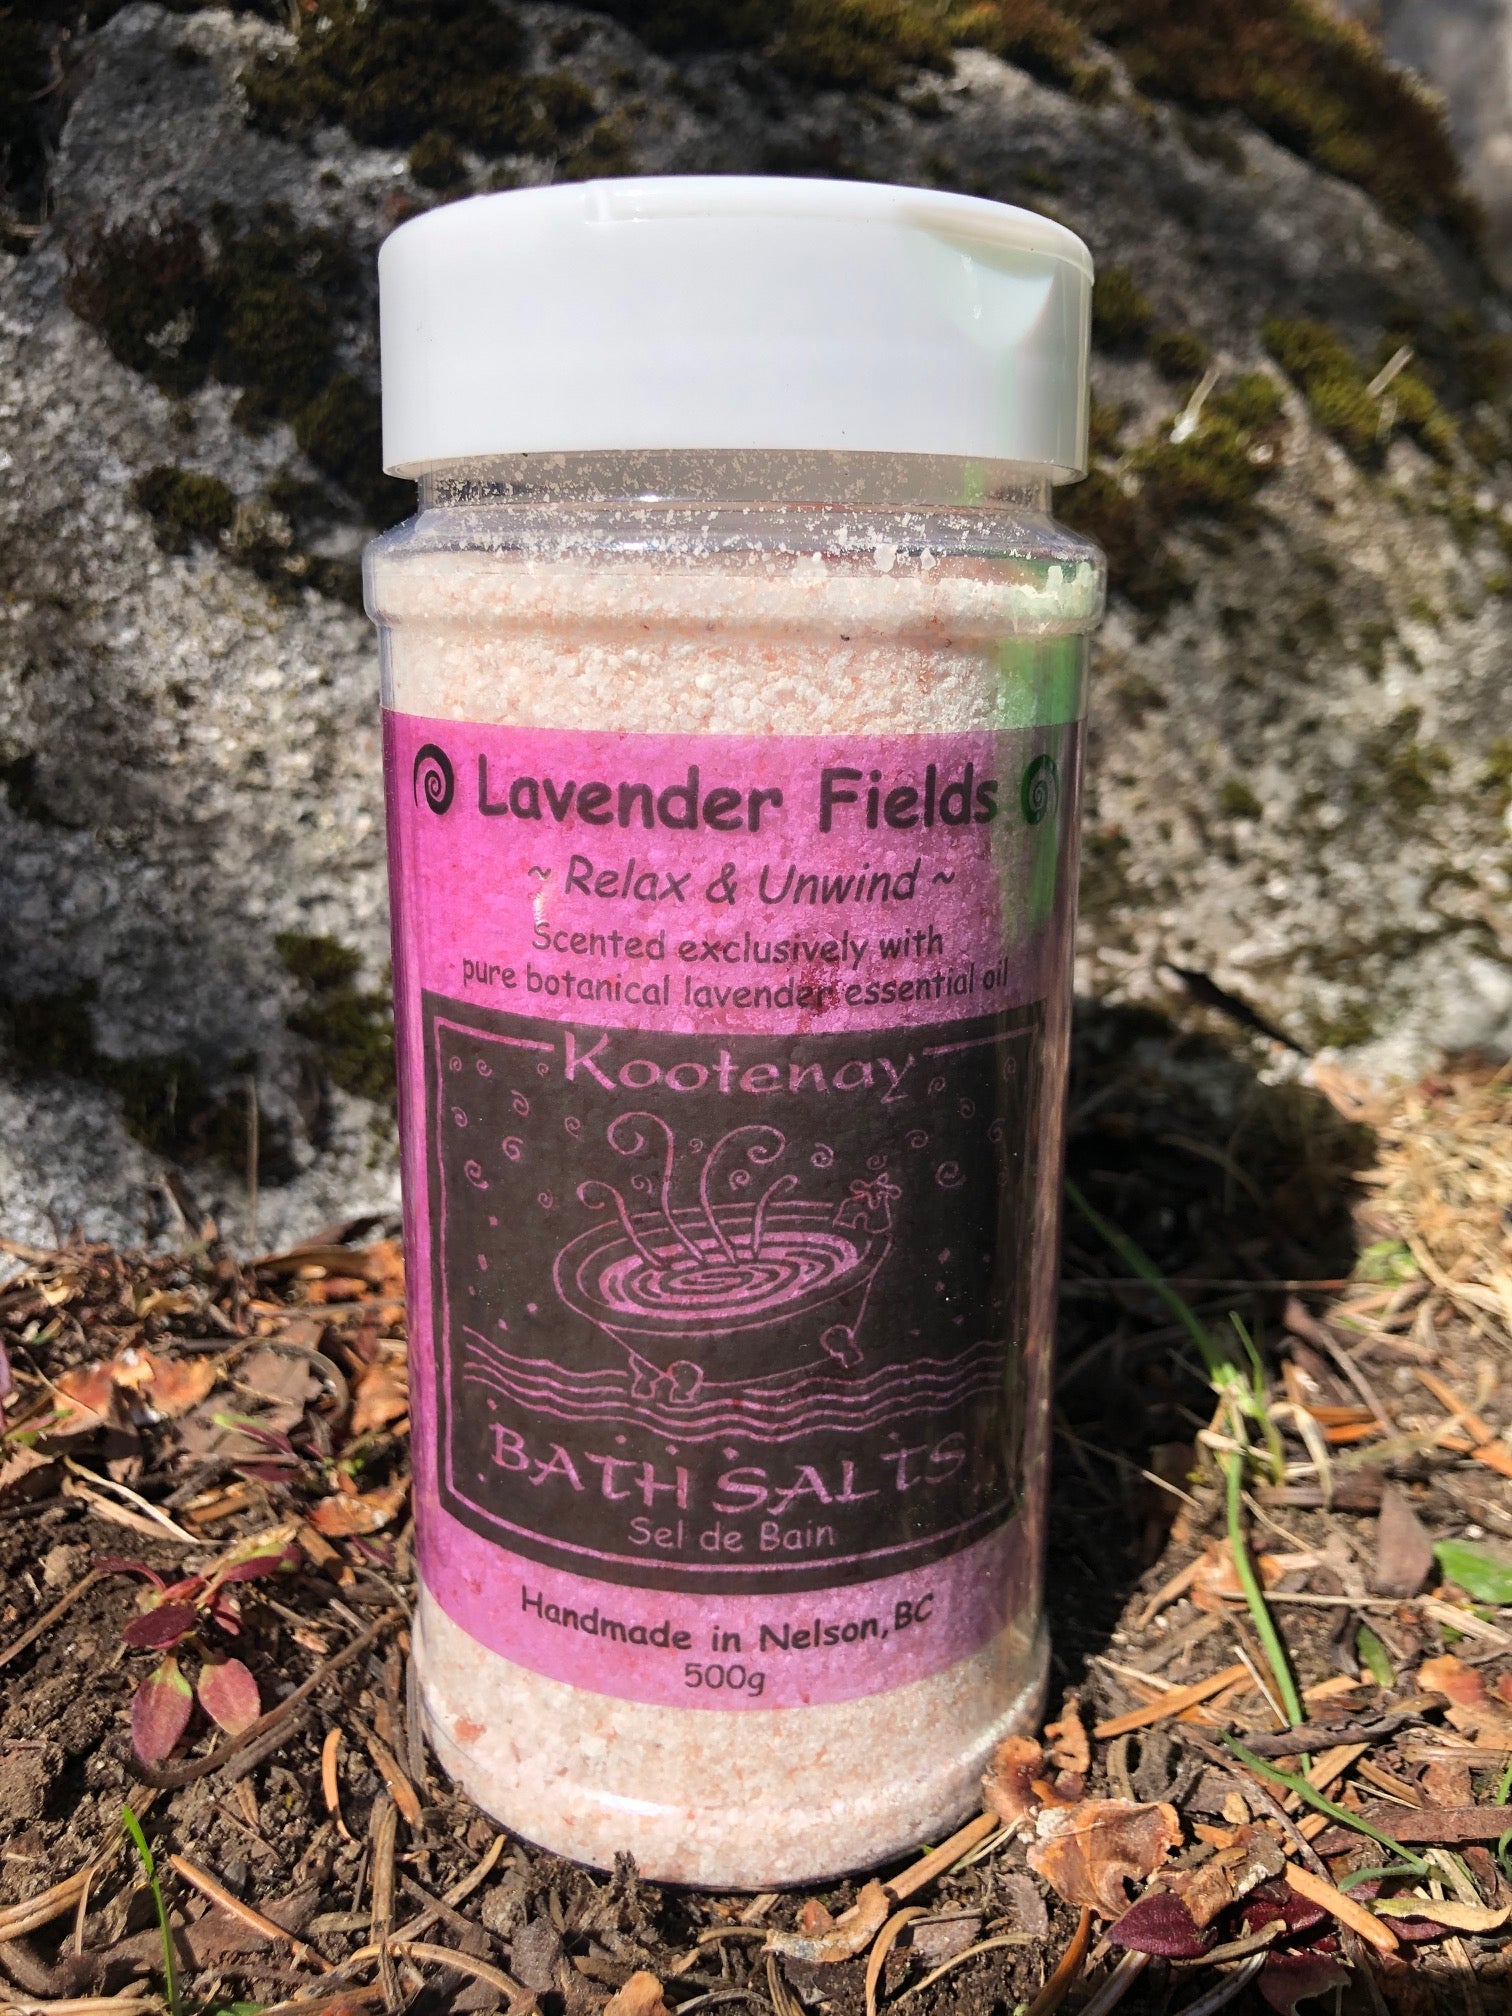 Lavender Fields Bath Salt